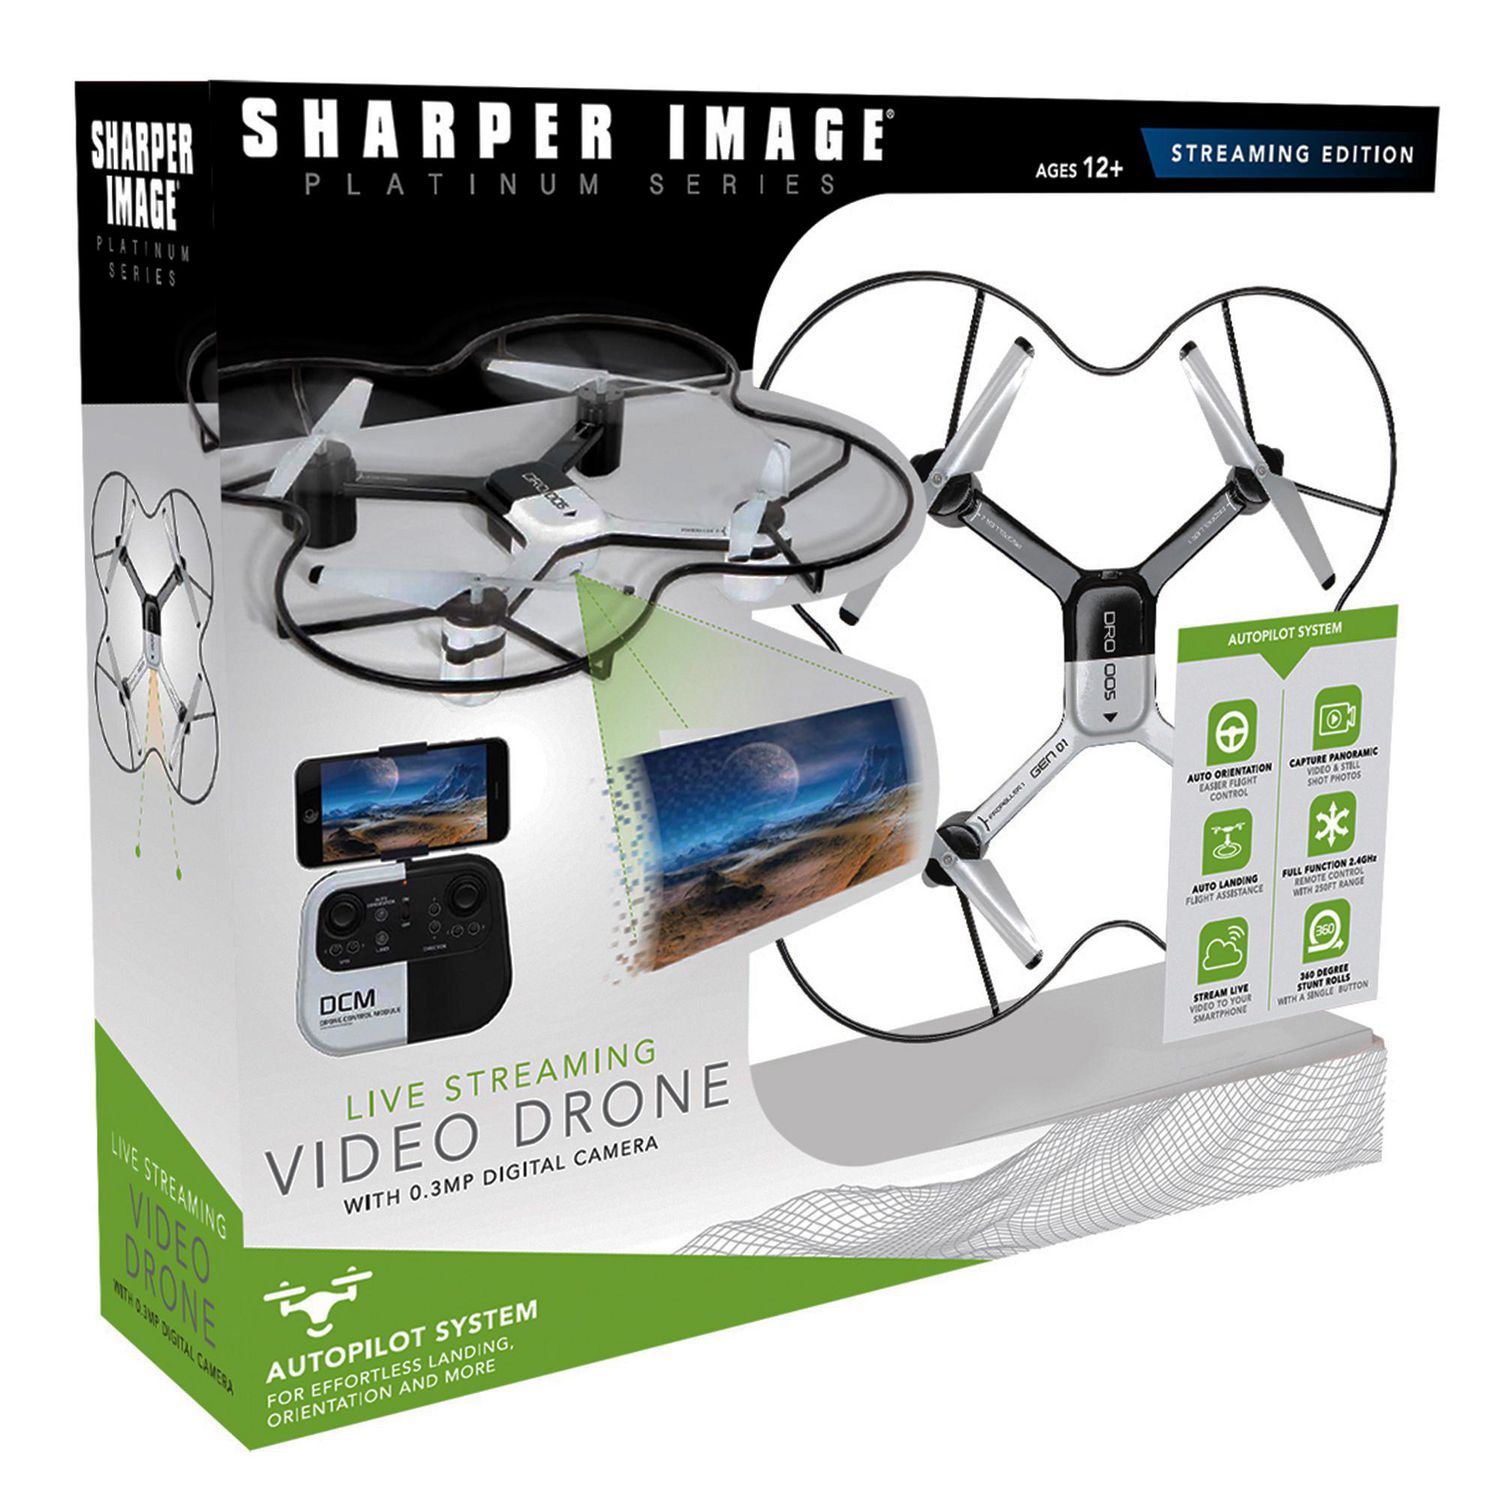 sharper image drone walmart